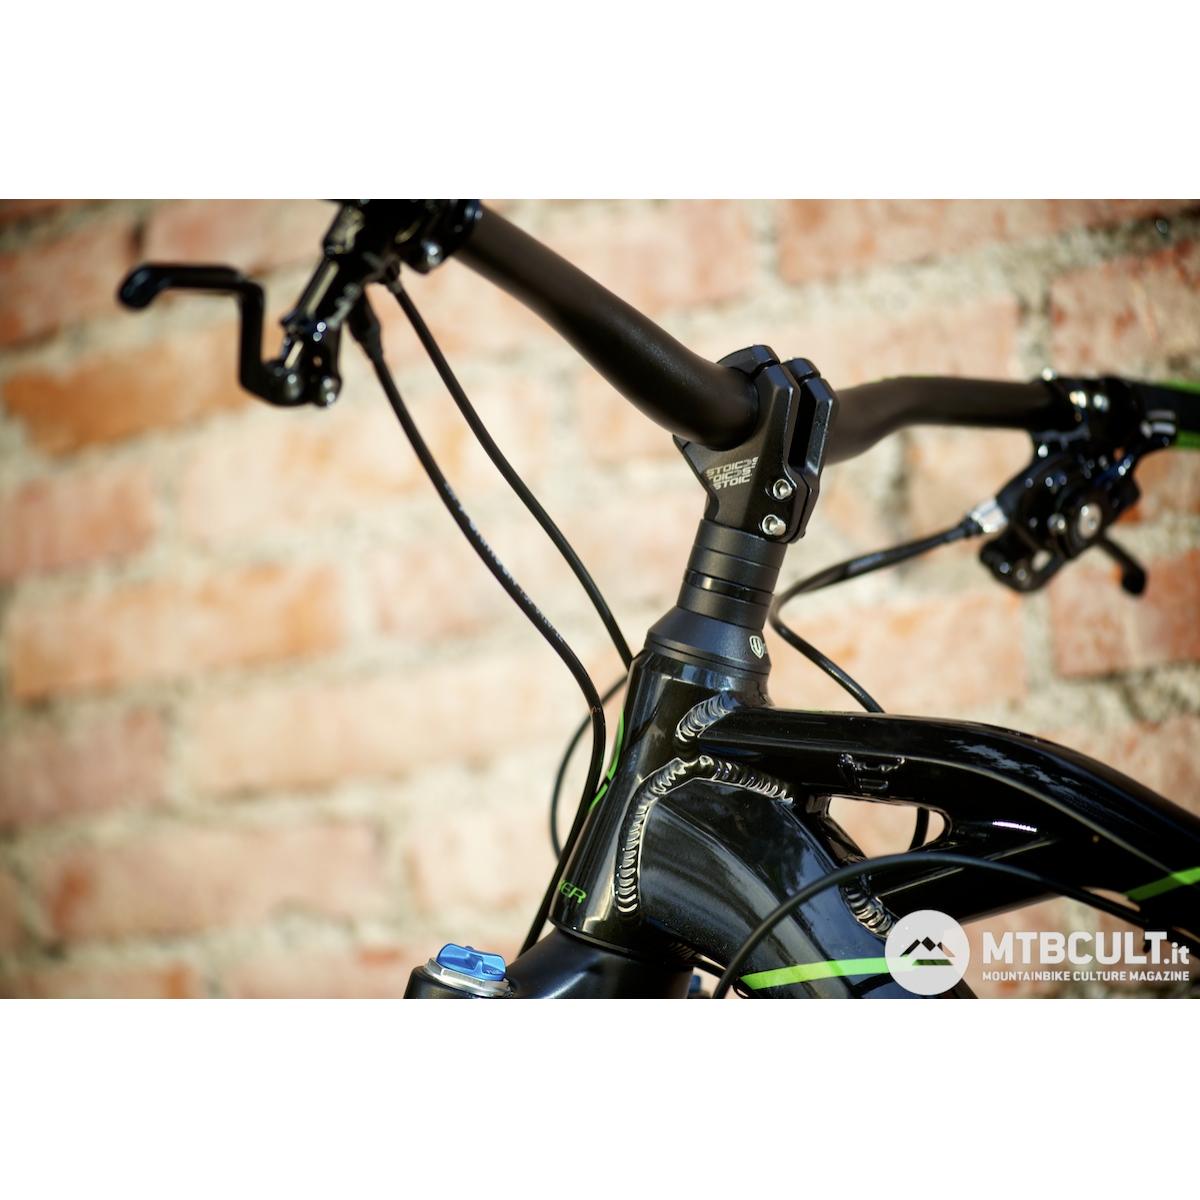 Sconosciuto Bicicletta Leggera EC90 3K Full Carbon Bike Manubrio Bici Leggera per MTB Mountain Road 31.8MM 